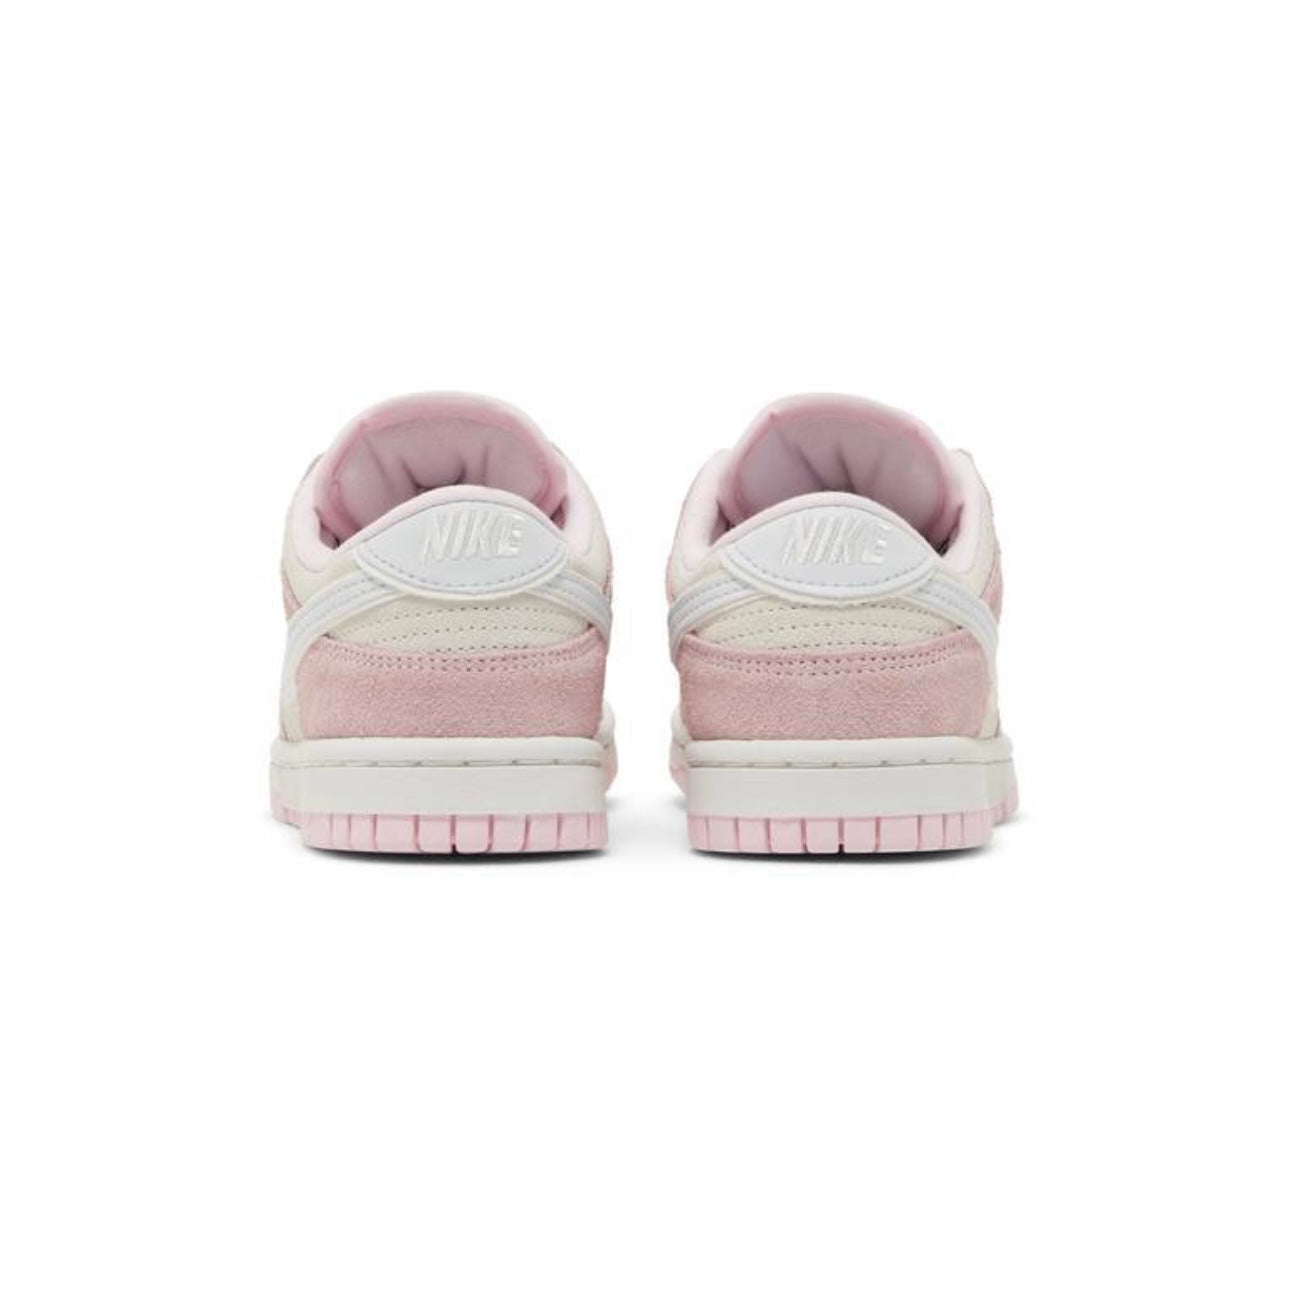 Nike Dunk Low LX "Pink Foam"